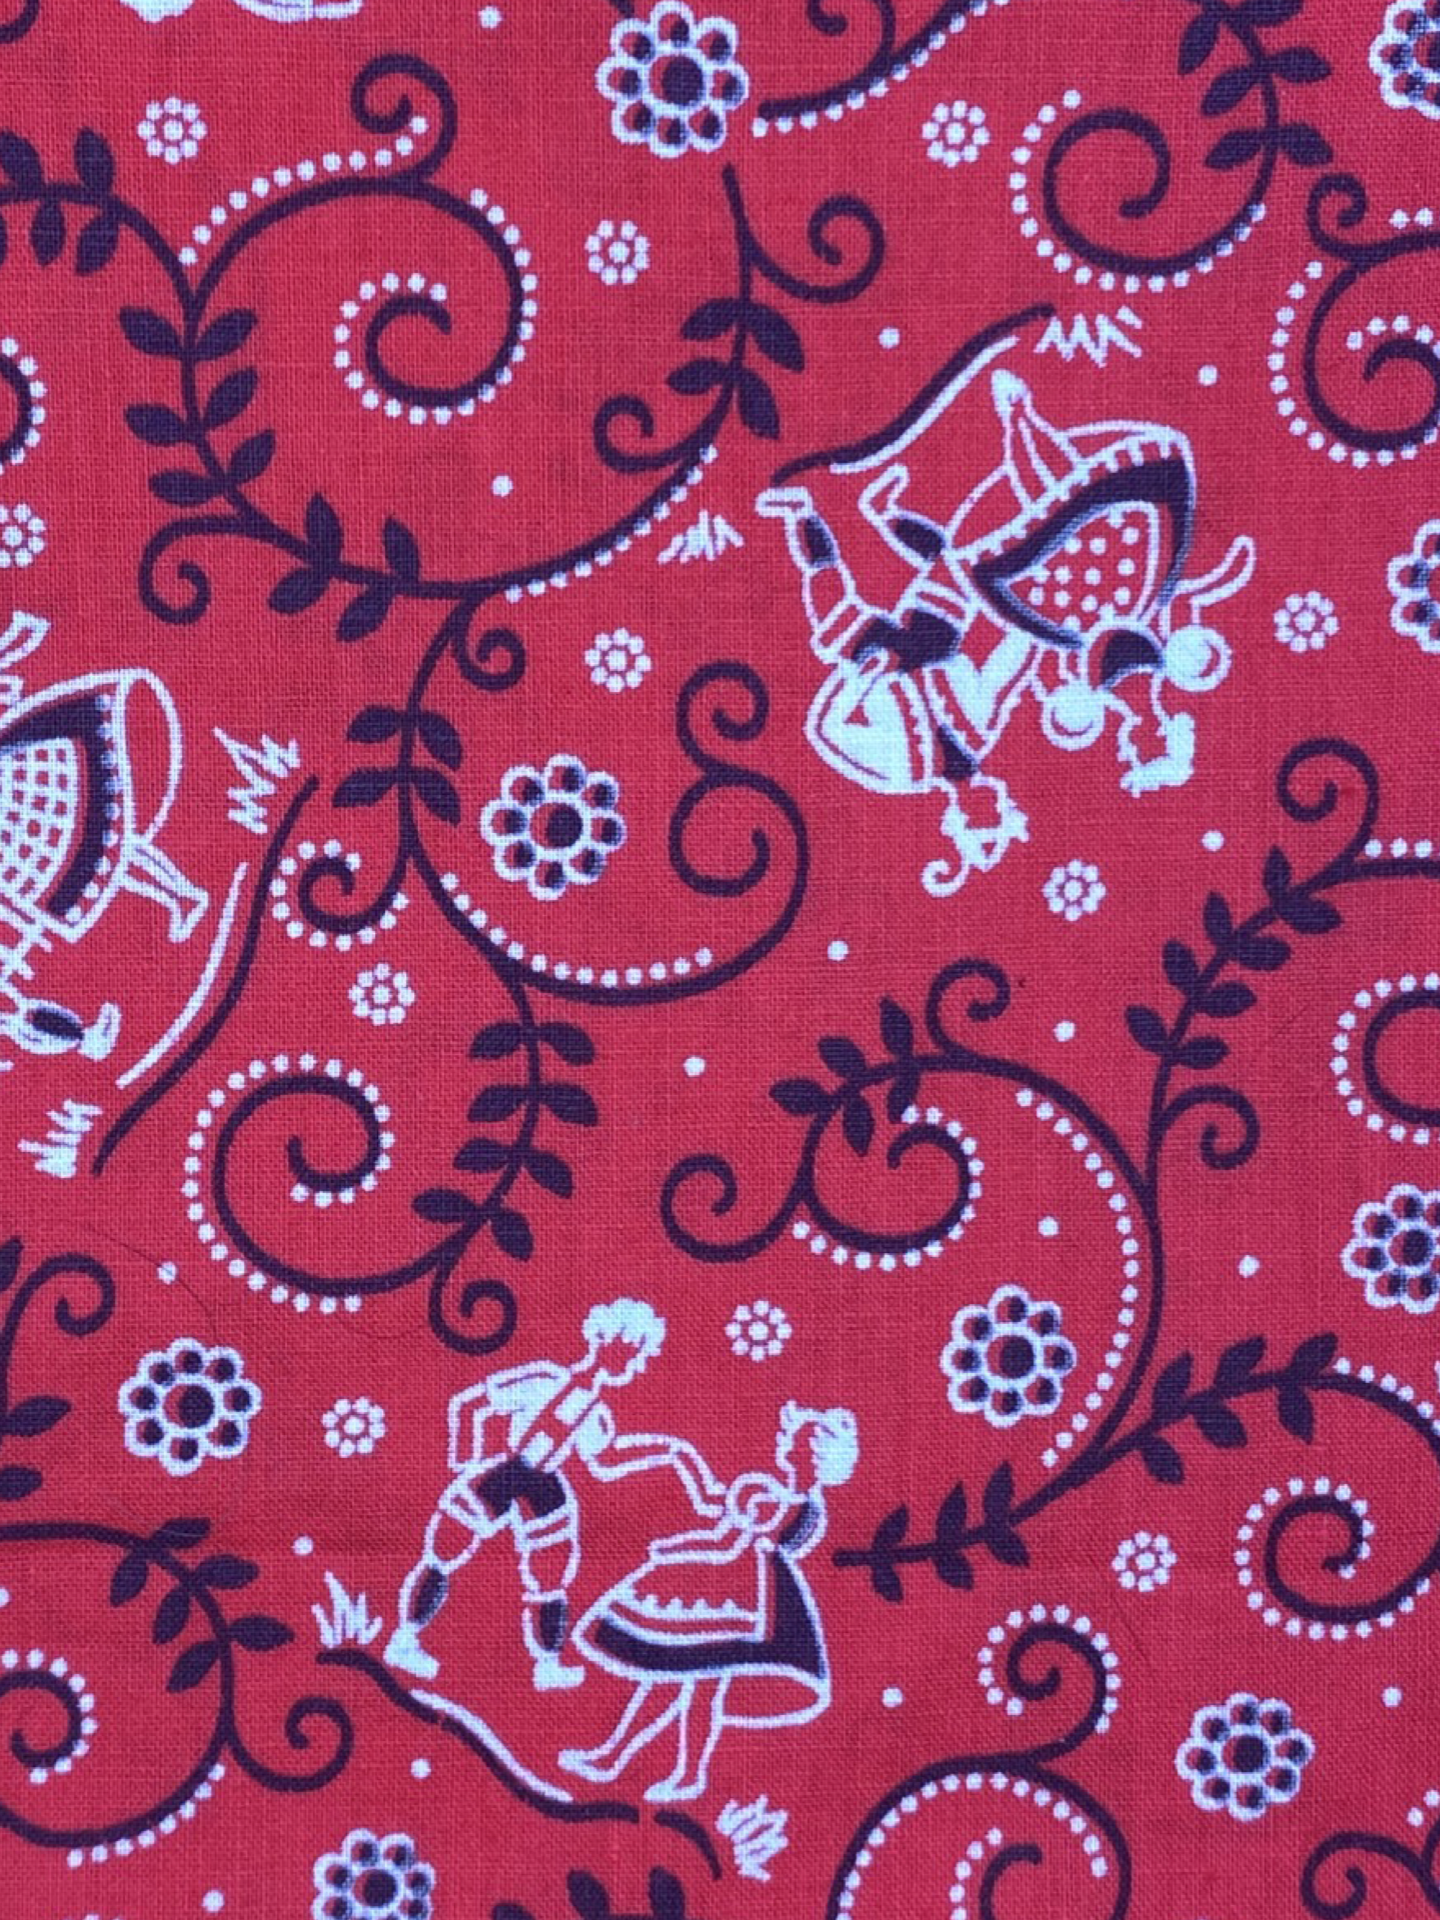 1950s Red Bavarian Novelty Print Cotton